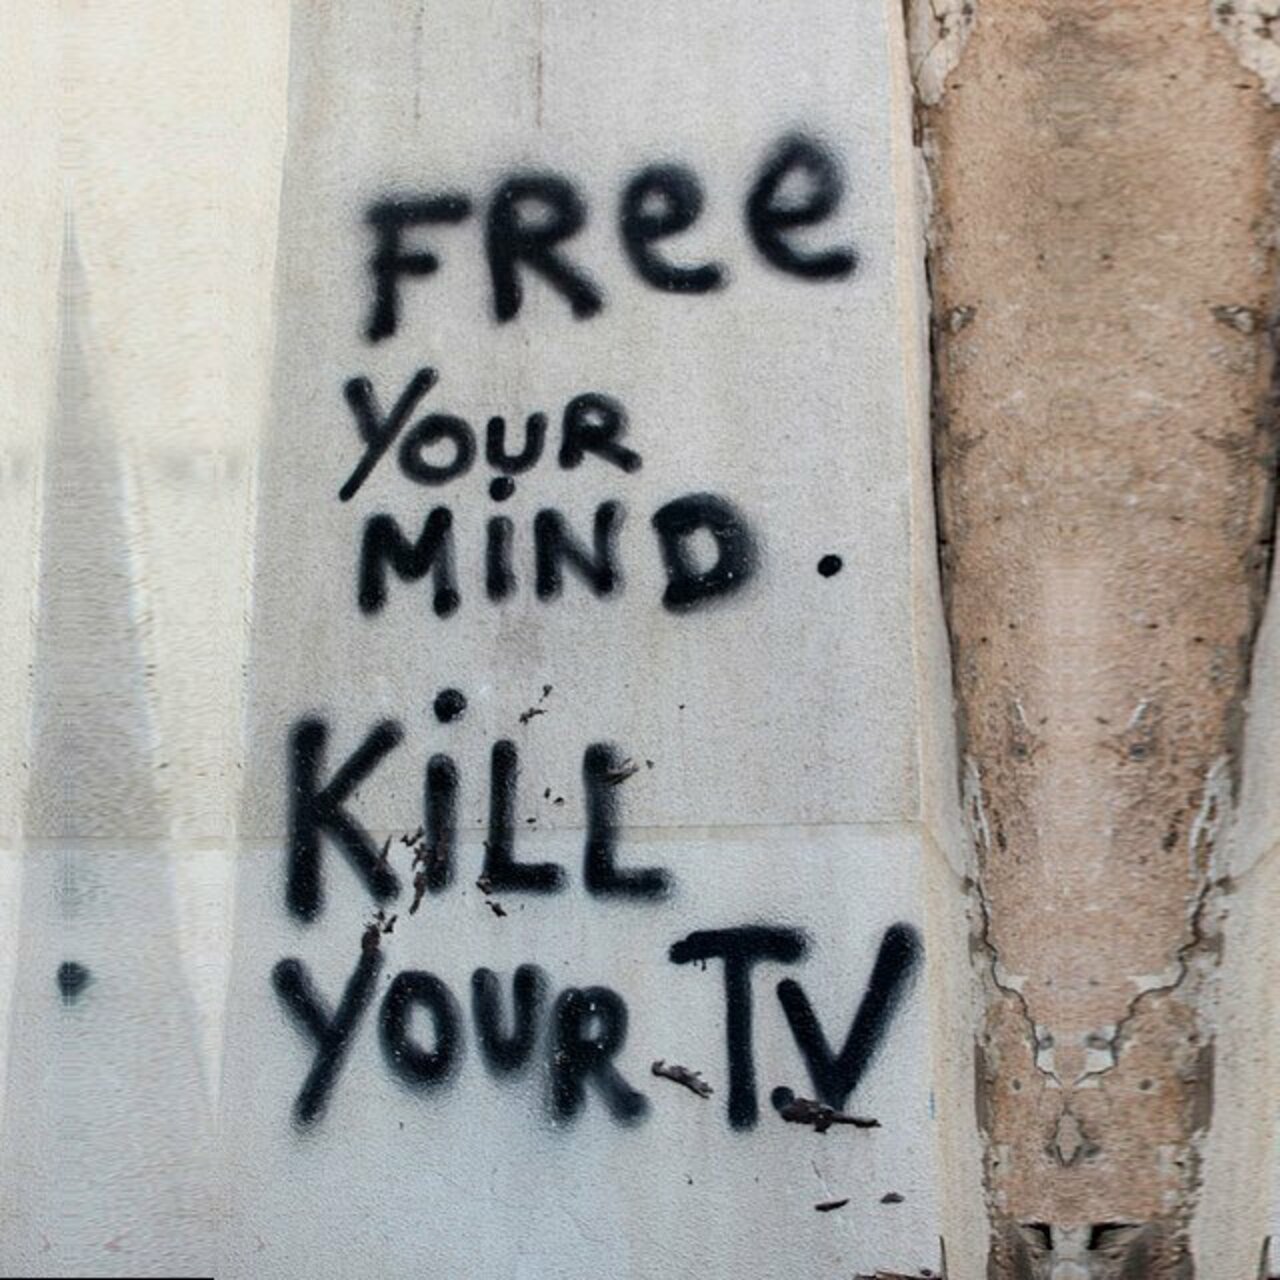 "Free your #mind, Kill your #TV" - #Creative #Streetart#art #critic #freedom #life… http://beartistbeart.com/2016/10/04/free-your-mind-kill-your-tv-creative-streetart https://t.co/XZLP5FEpEN